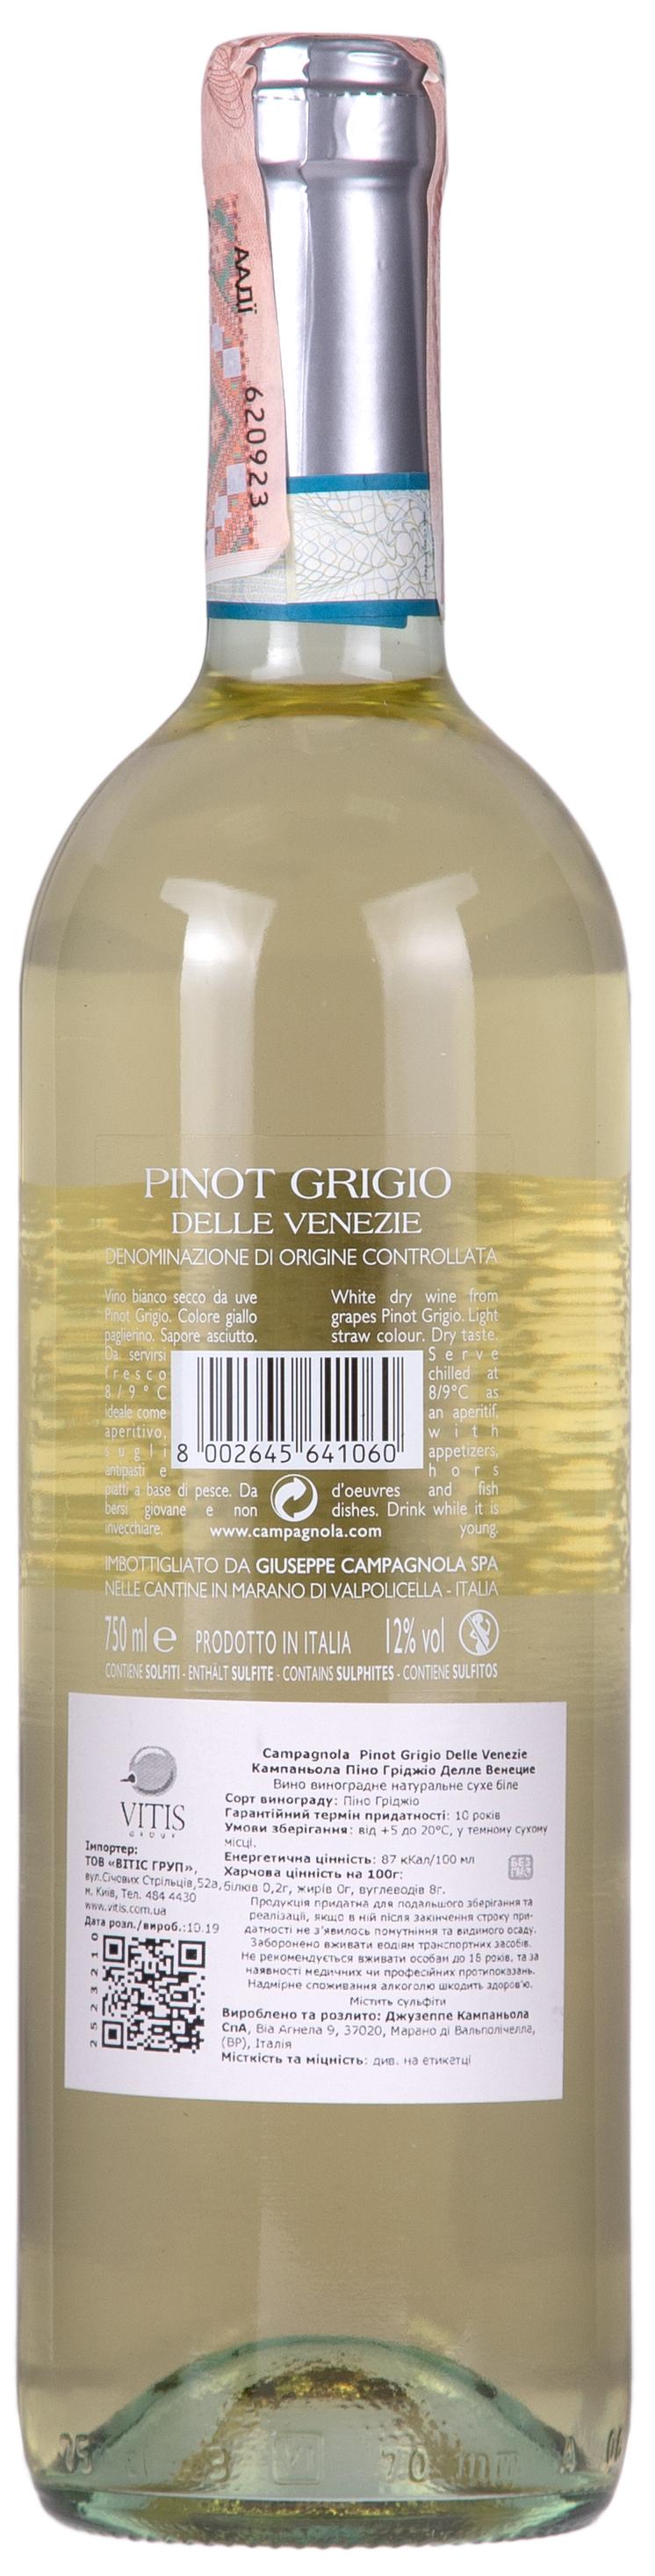 Campagnola Pinot Grigio 2018 Set 6 Bottles - 2